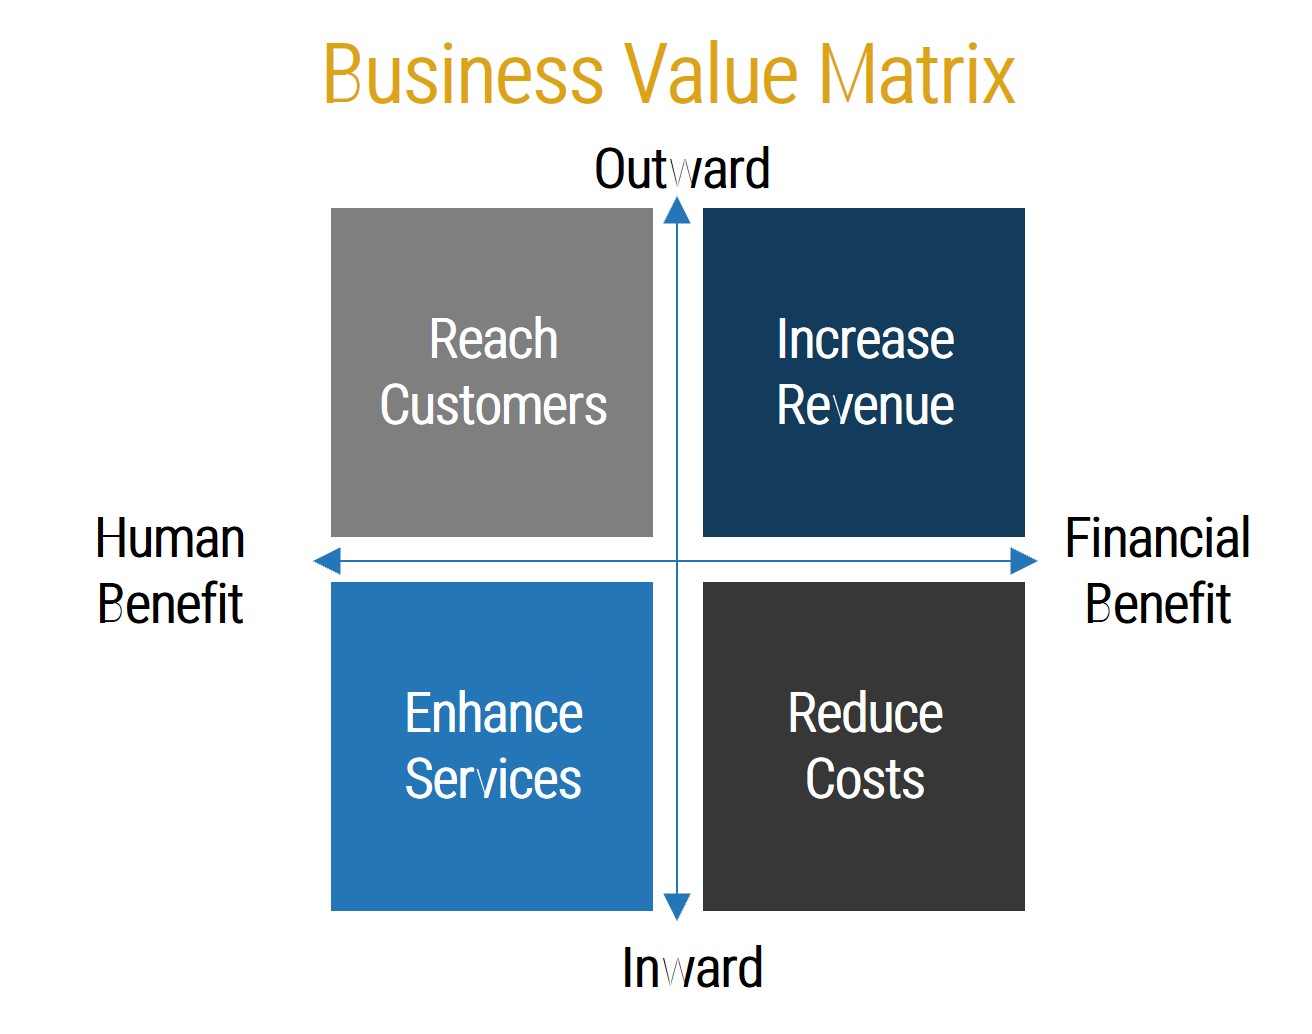 A business value matrix is shown.